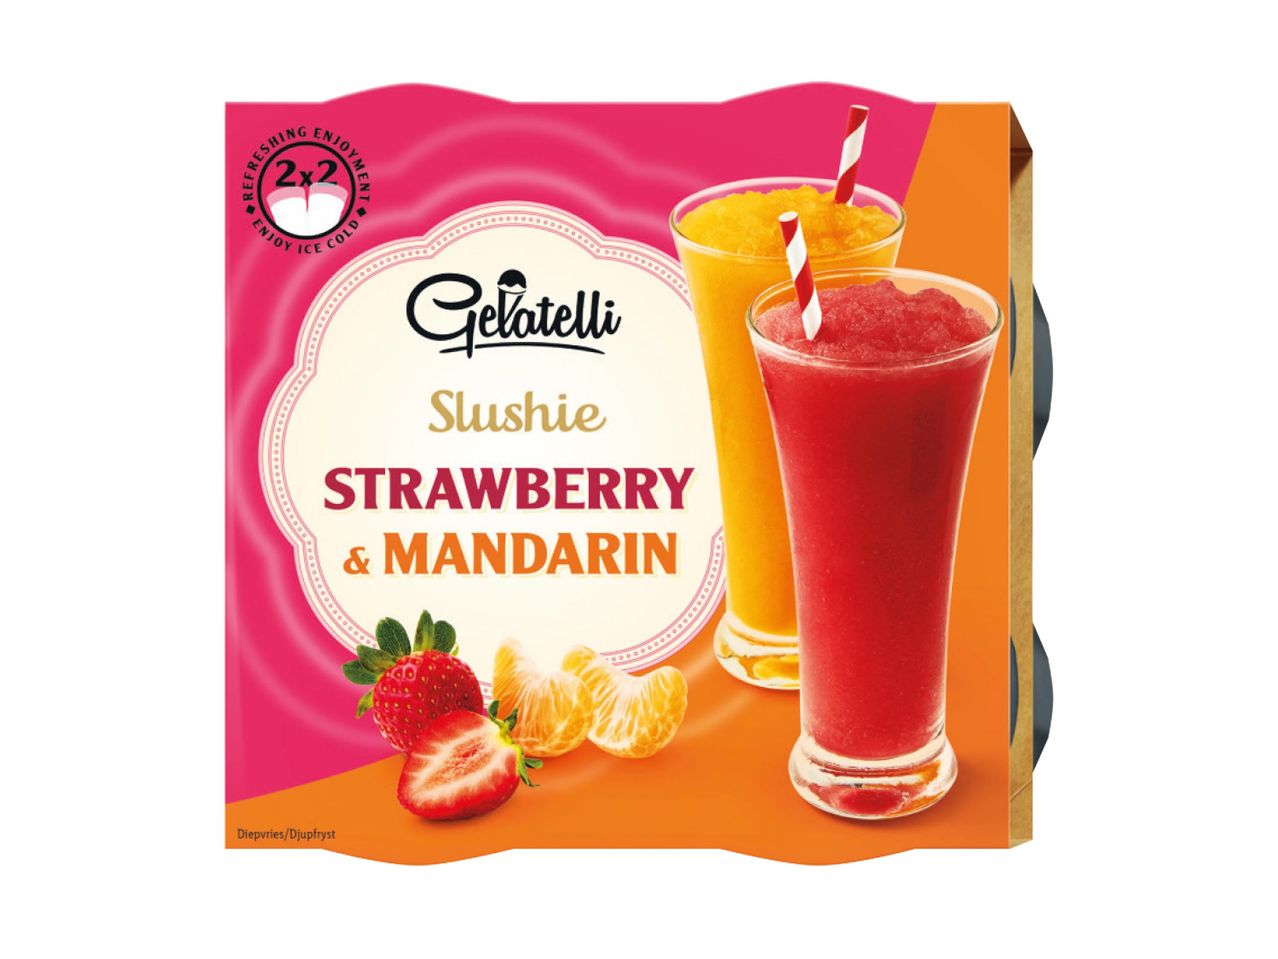 Go to full screen view: Strawberry & Mandarin Slushie - Image 1